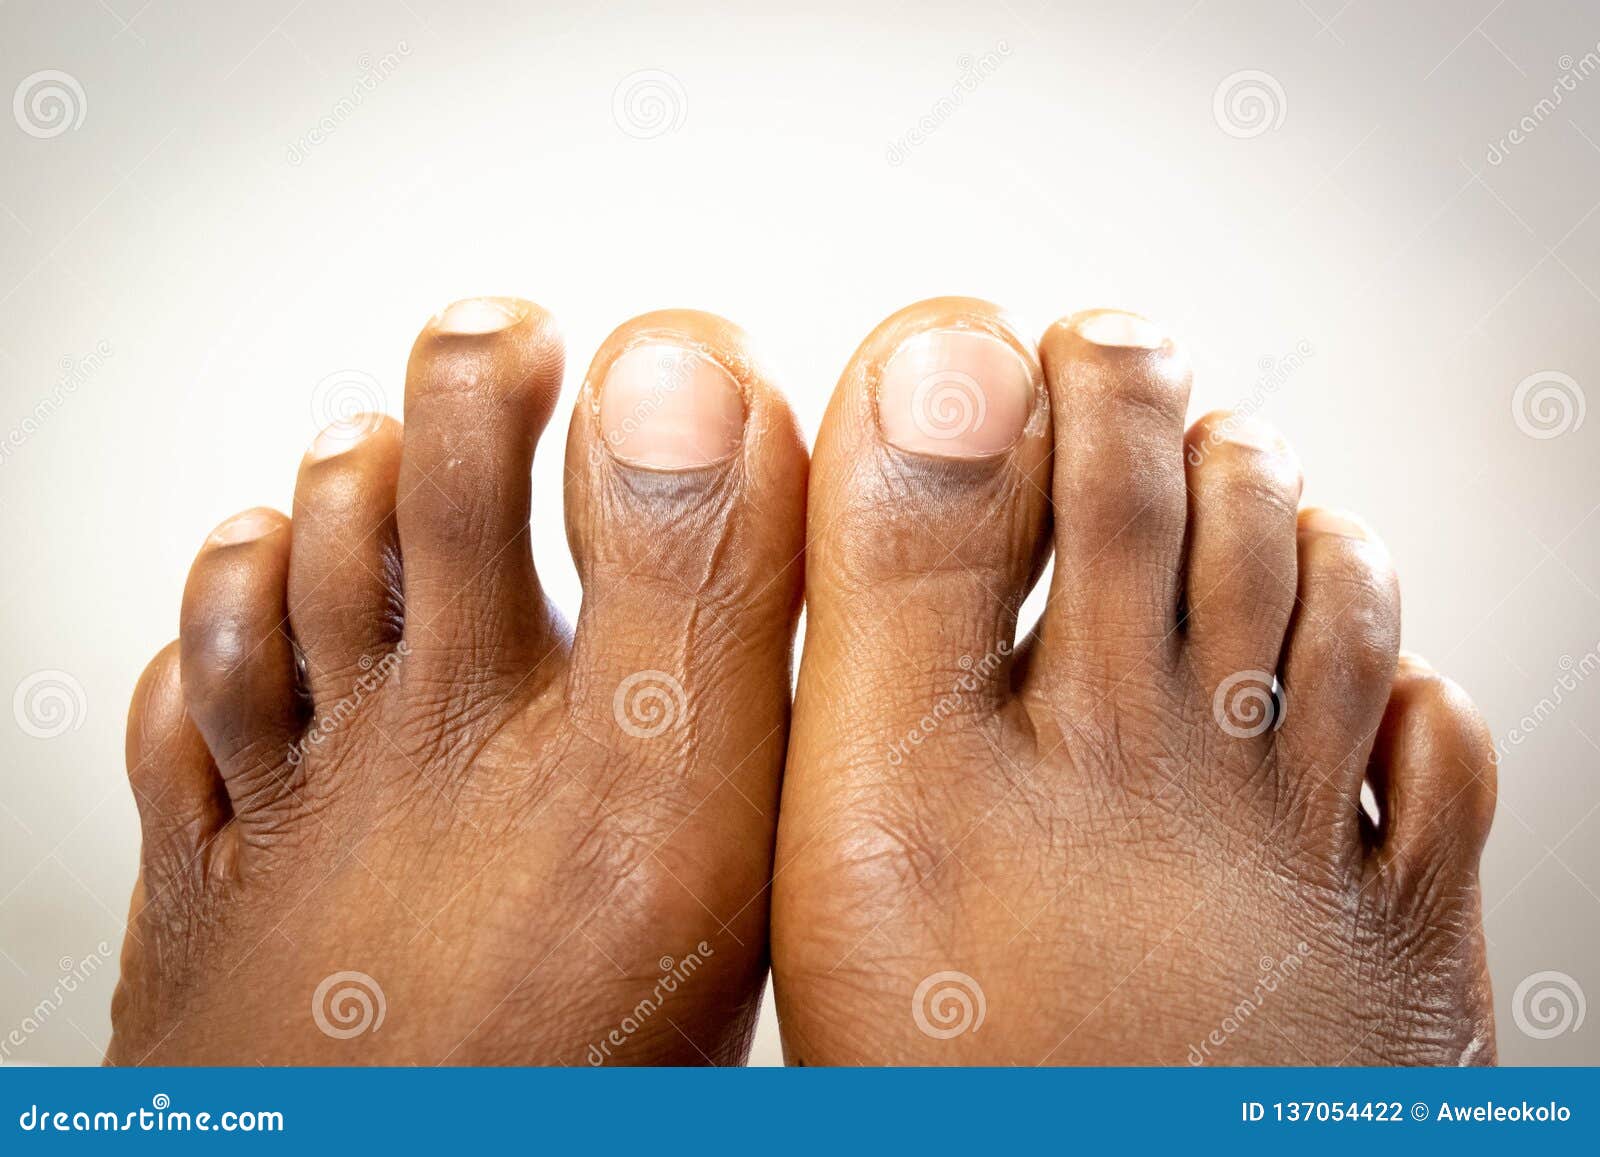 Ebony feet girl